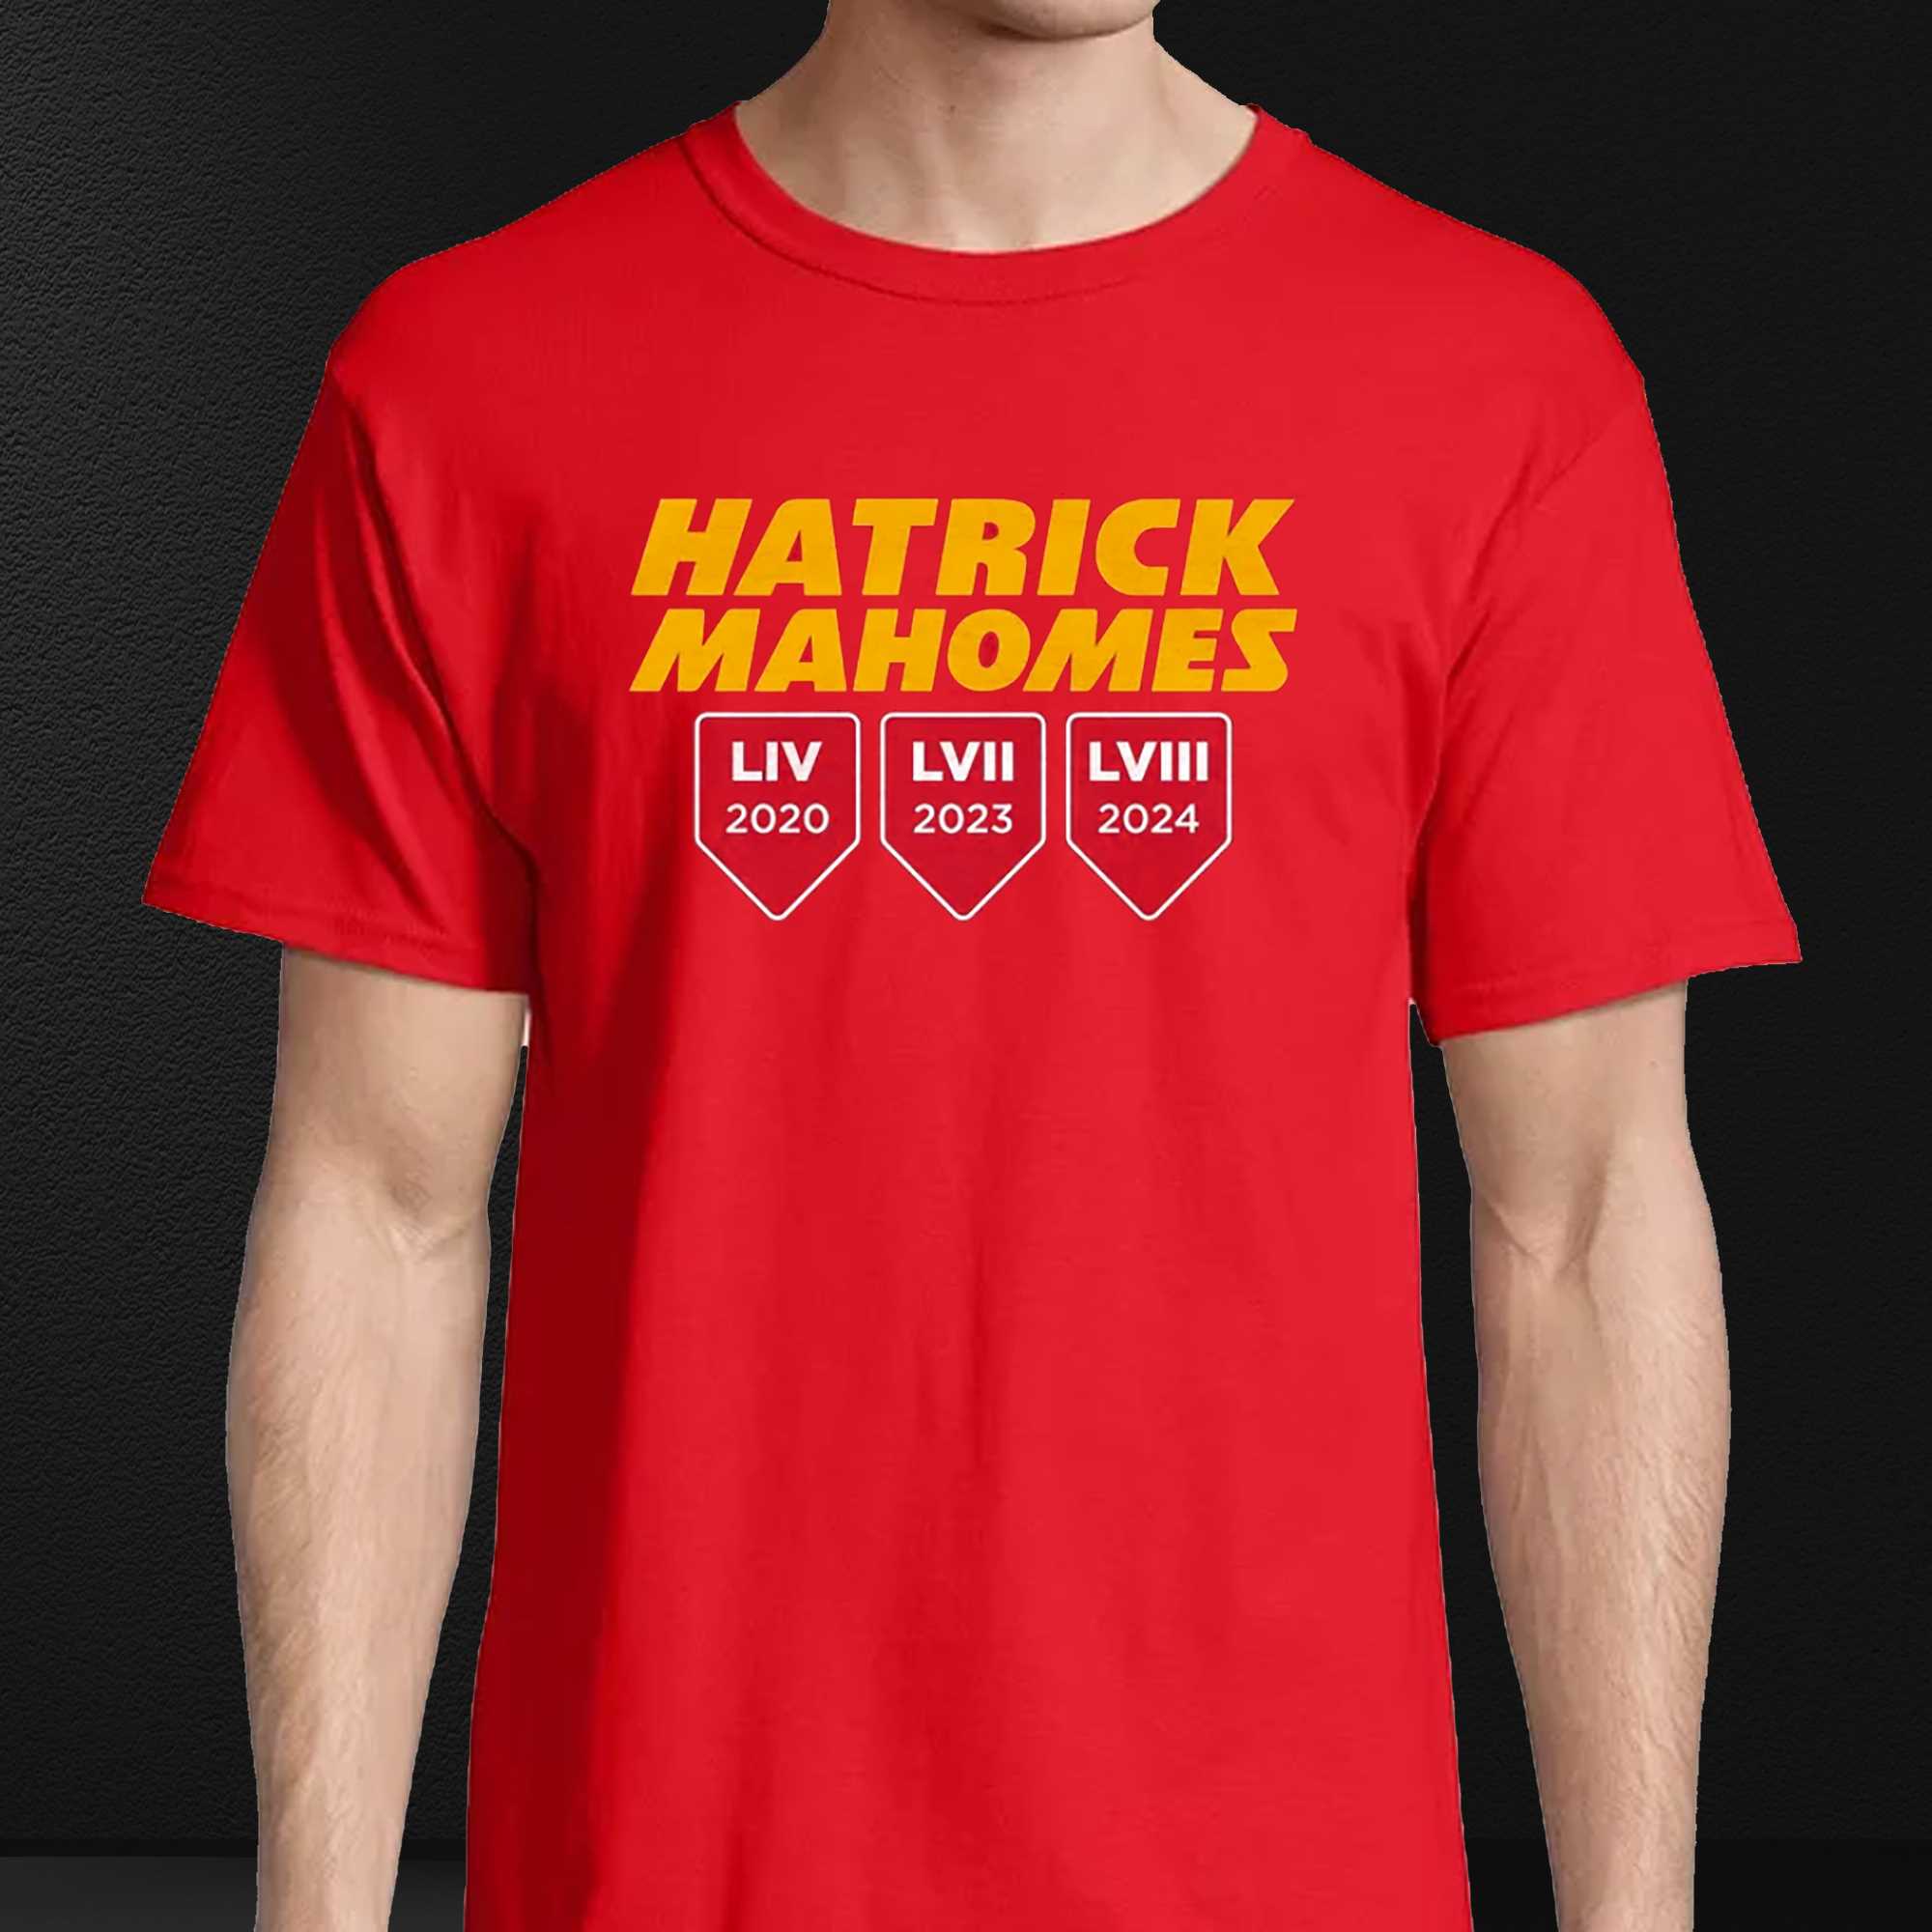 Hatrick Mahomes Hatrick Liv 2020 Lvii 2023 Lviii 2024 Shirt 